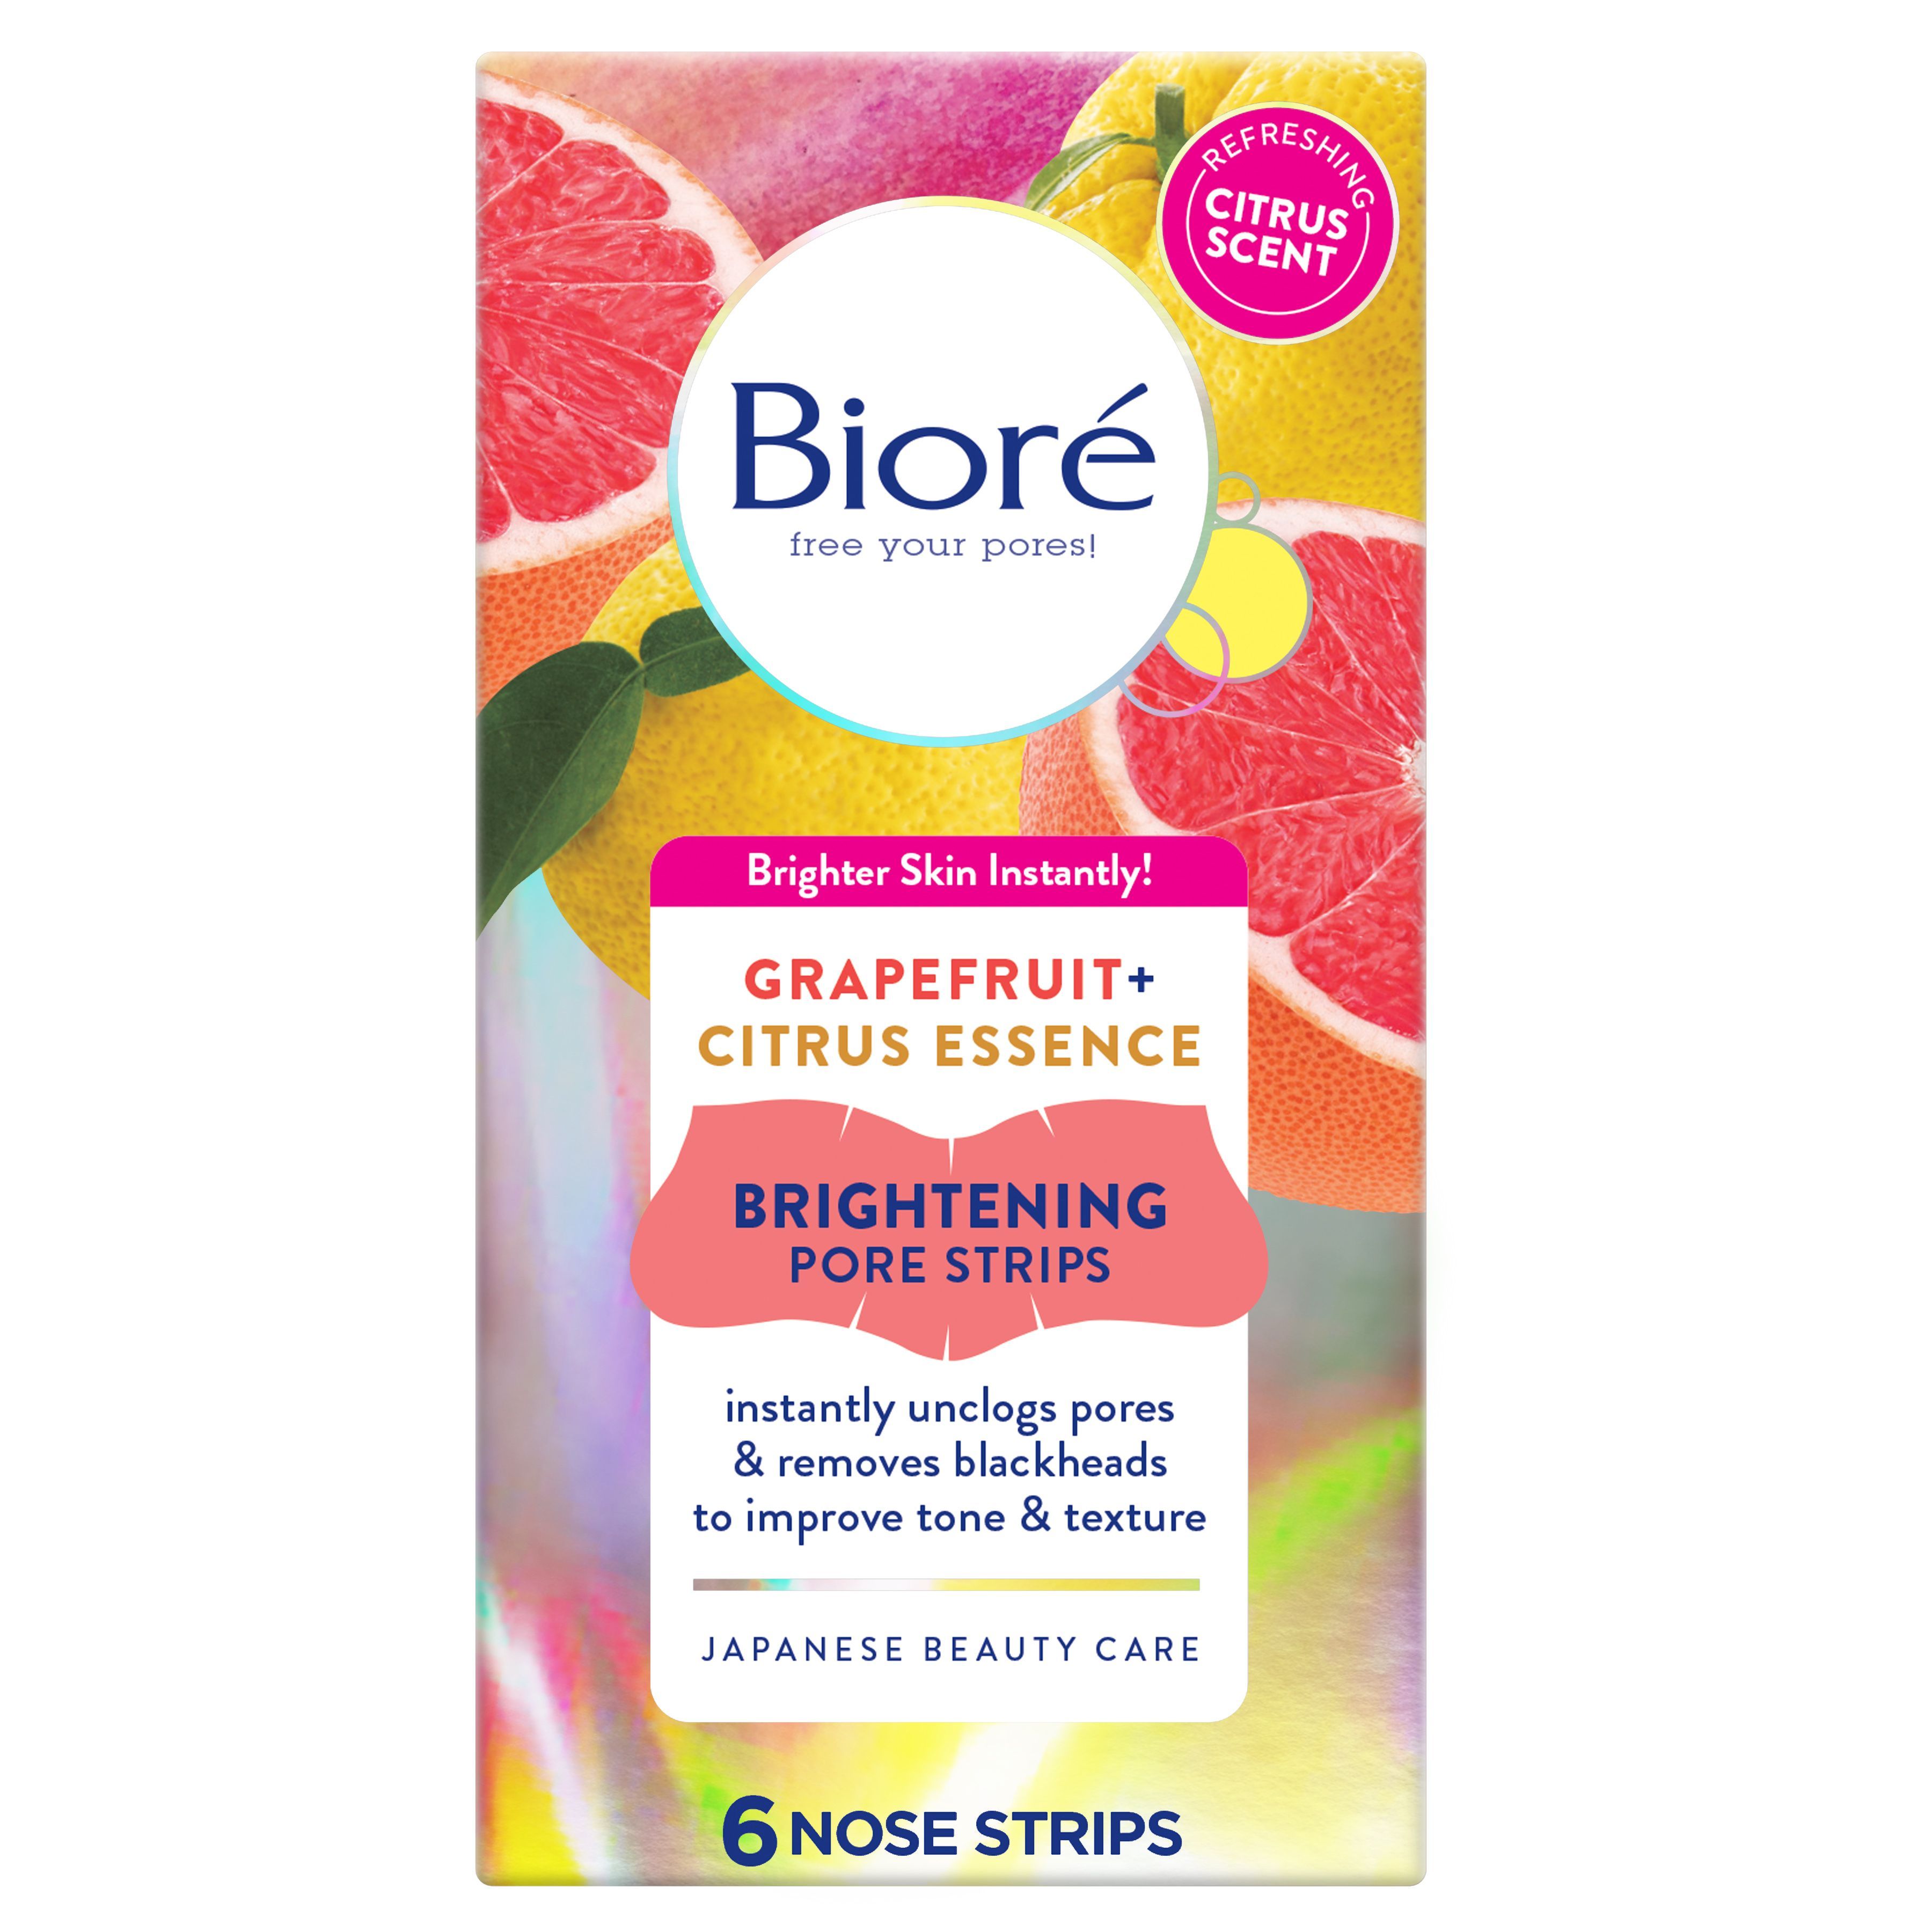 Bioré Brightening Pore Strips